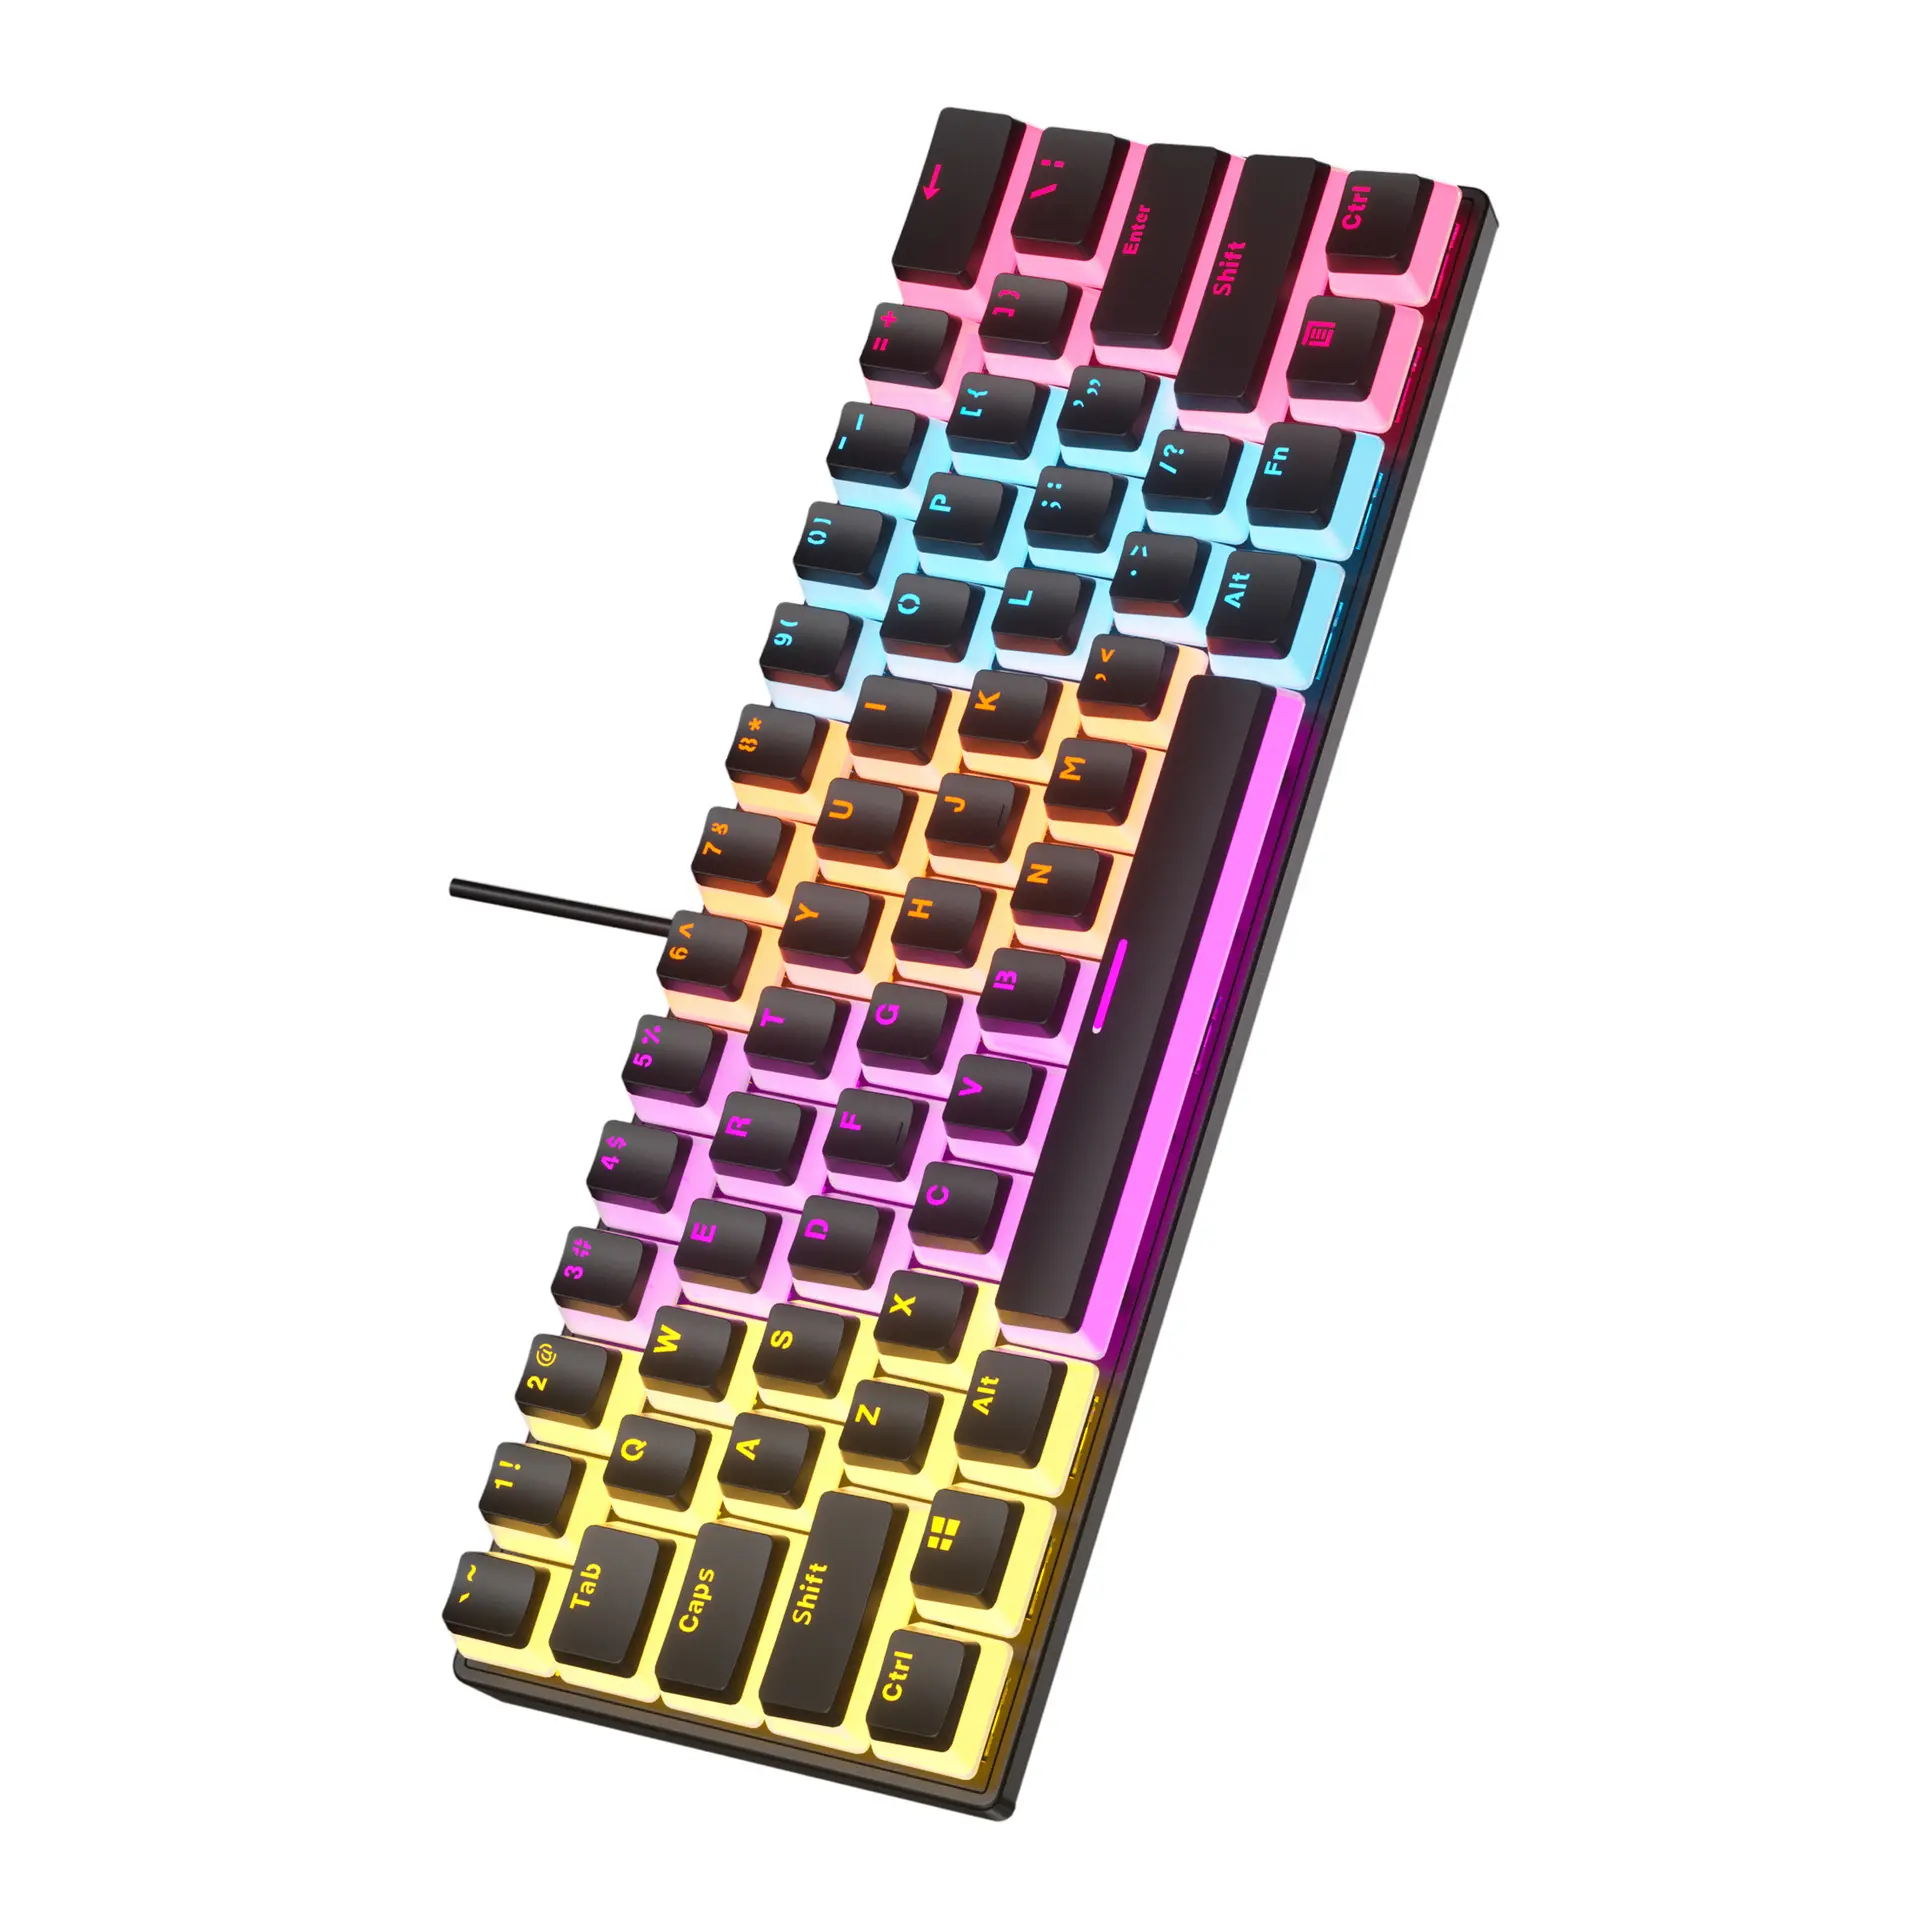 Cheap Price Wholesale OEM USB 61 Keys Mini Wired RGB LED Mechanical Gaming Keyboard For Gamer Desktop PC Computer